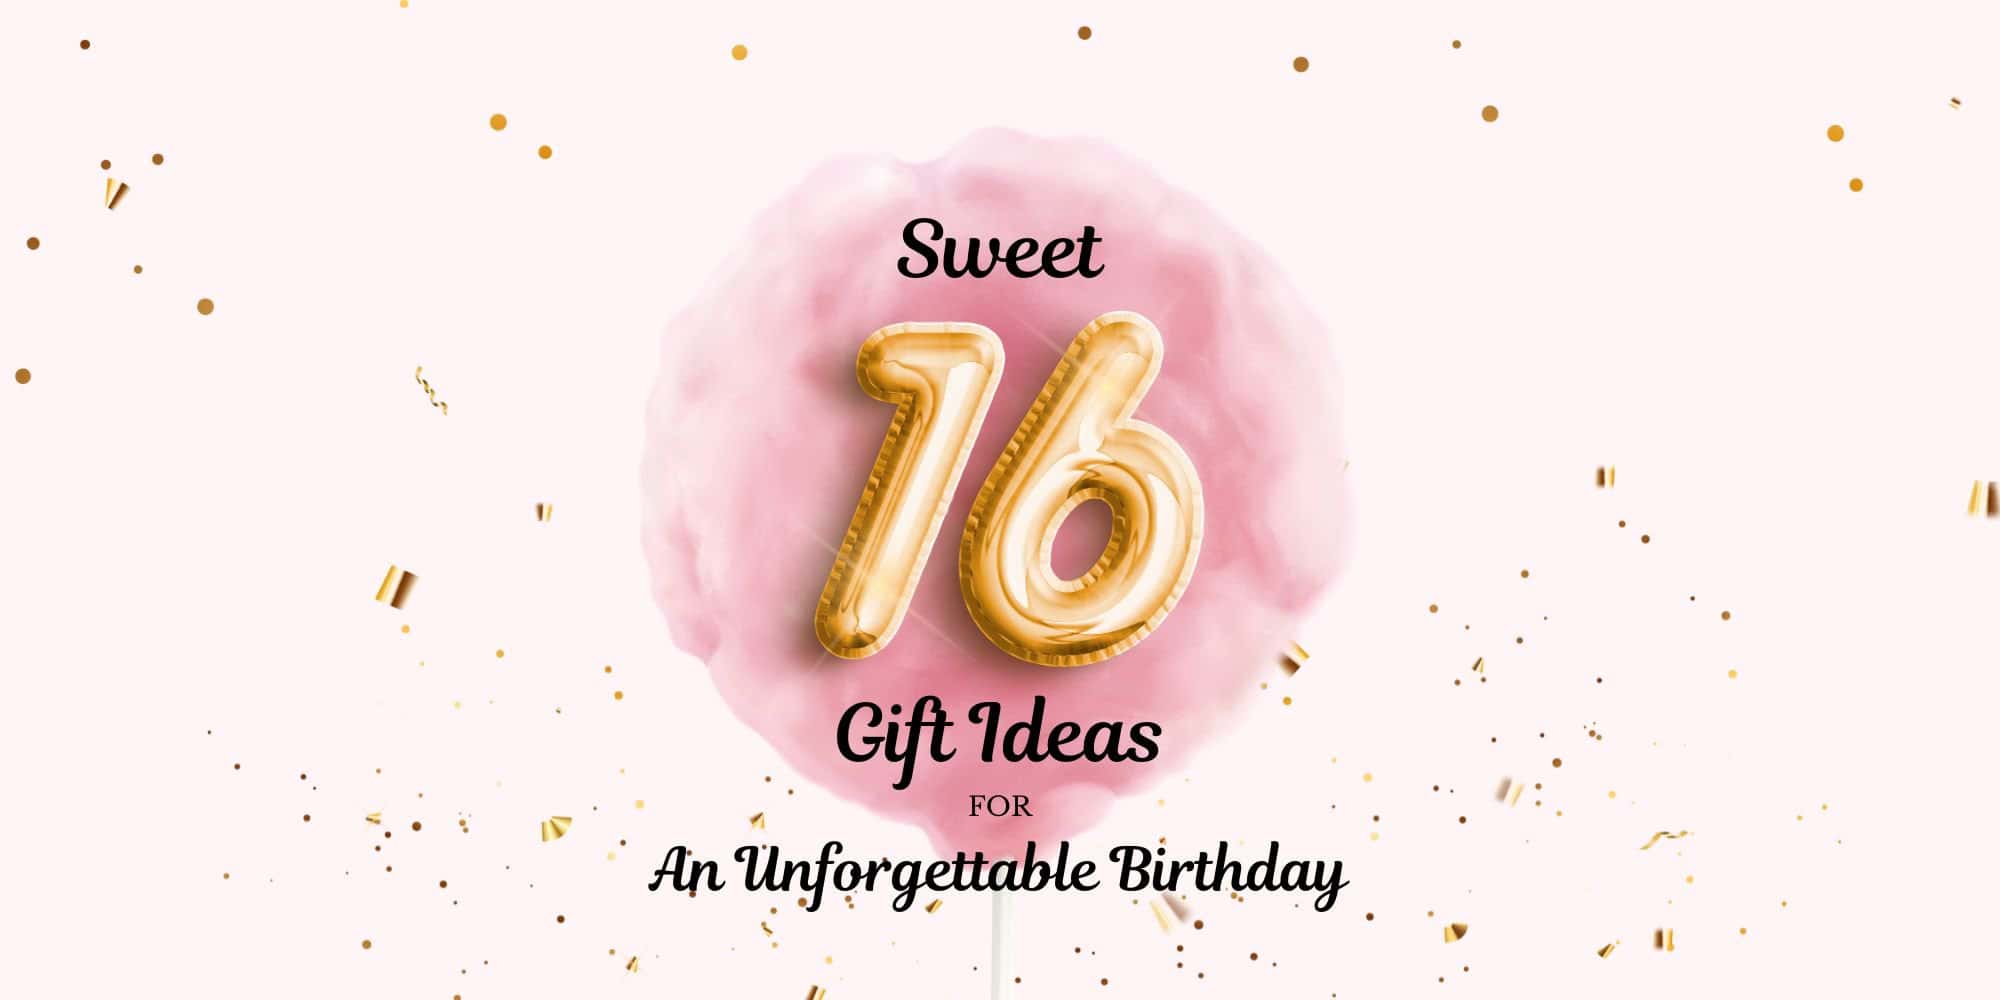 Sweet 16 gift ideas 1